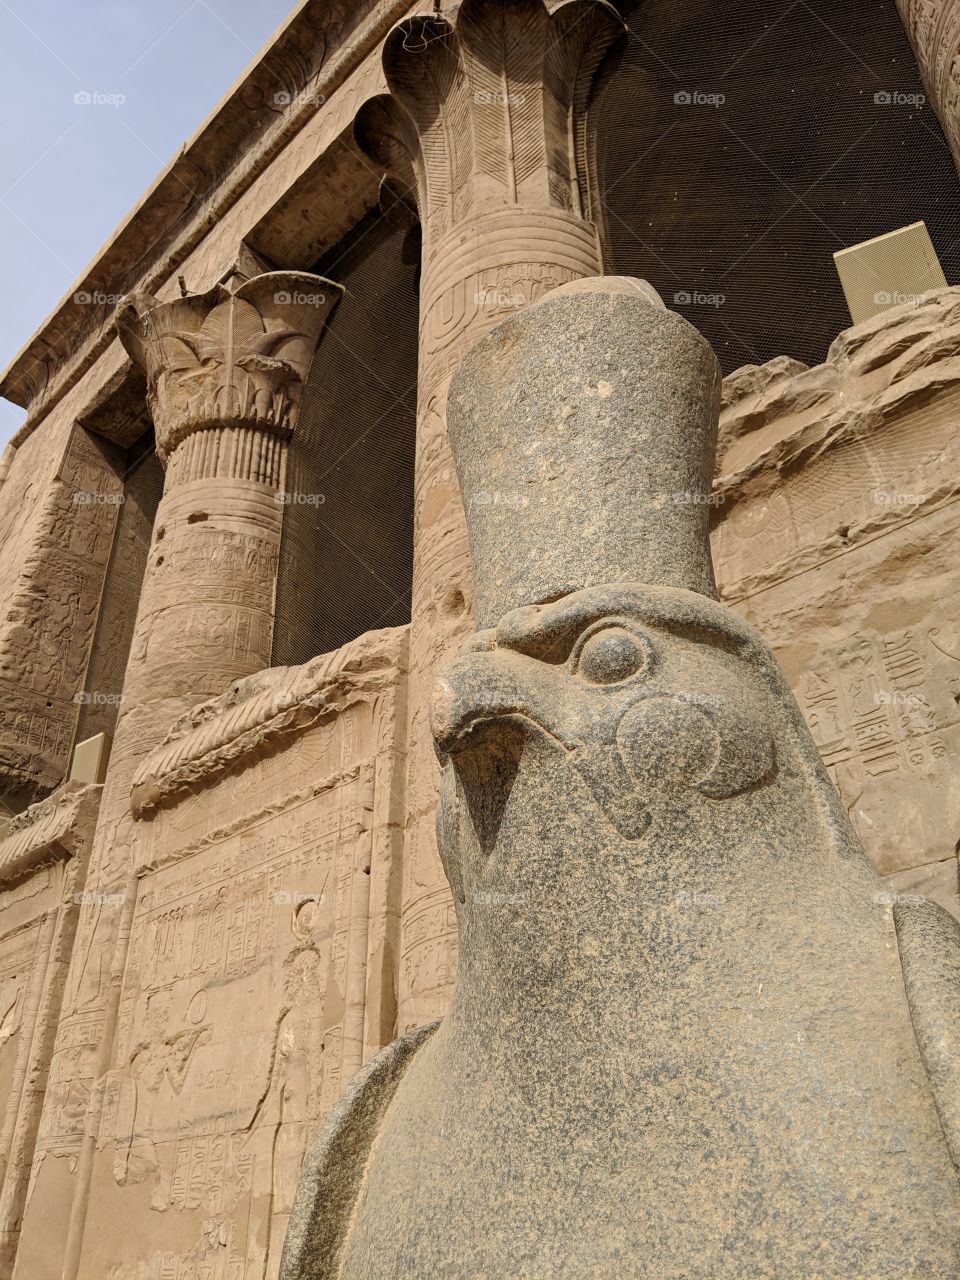 Statue of the good, Horus, guarding the entrance to the Temple of Edfu in Edfu, Egypt.